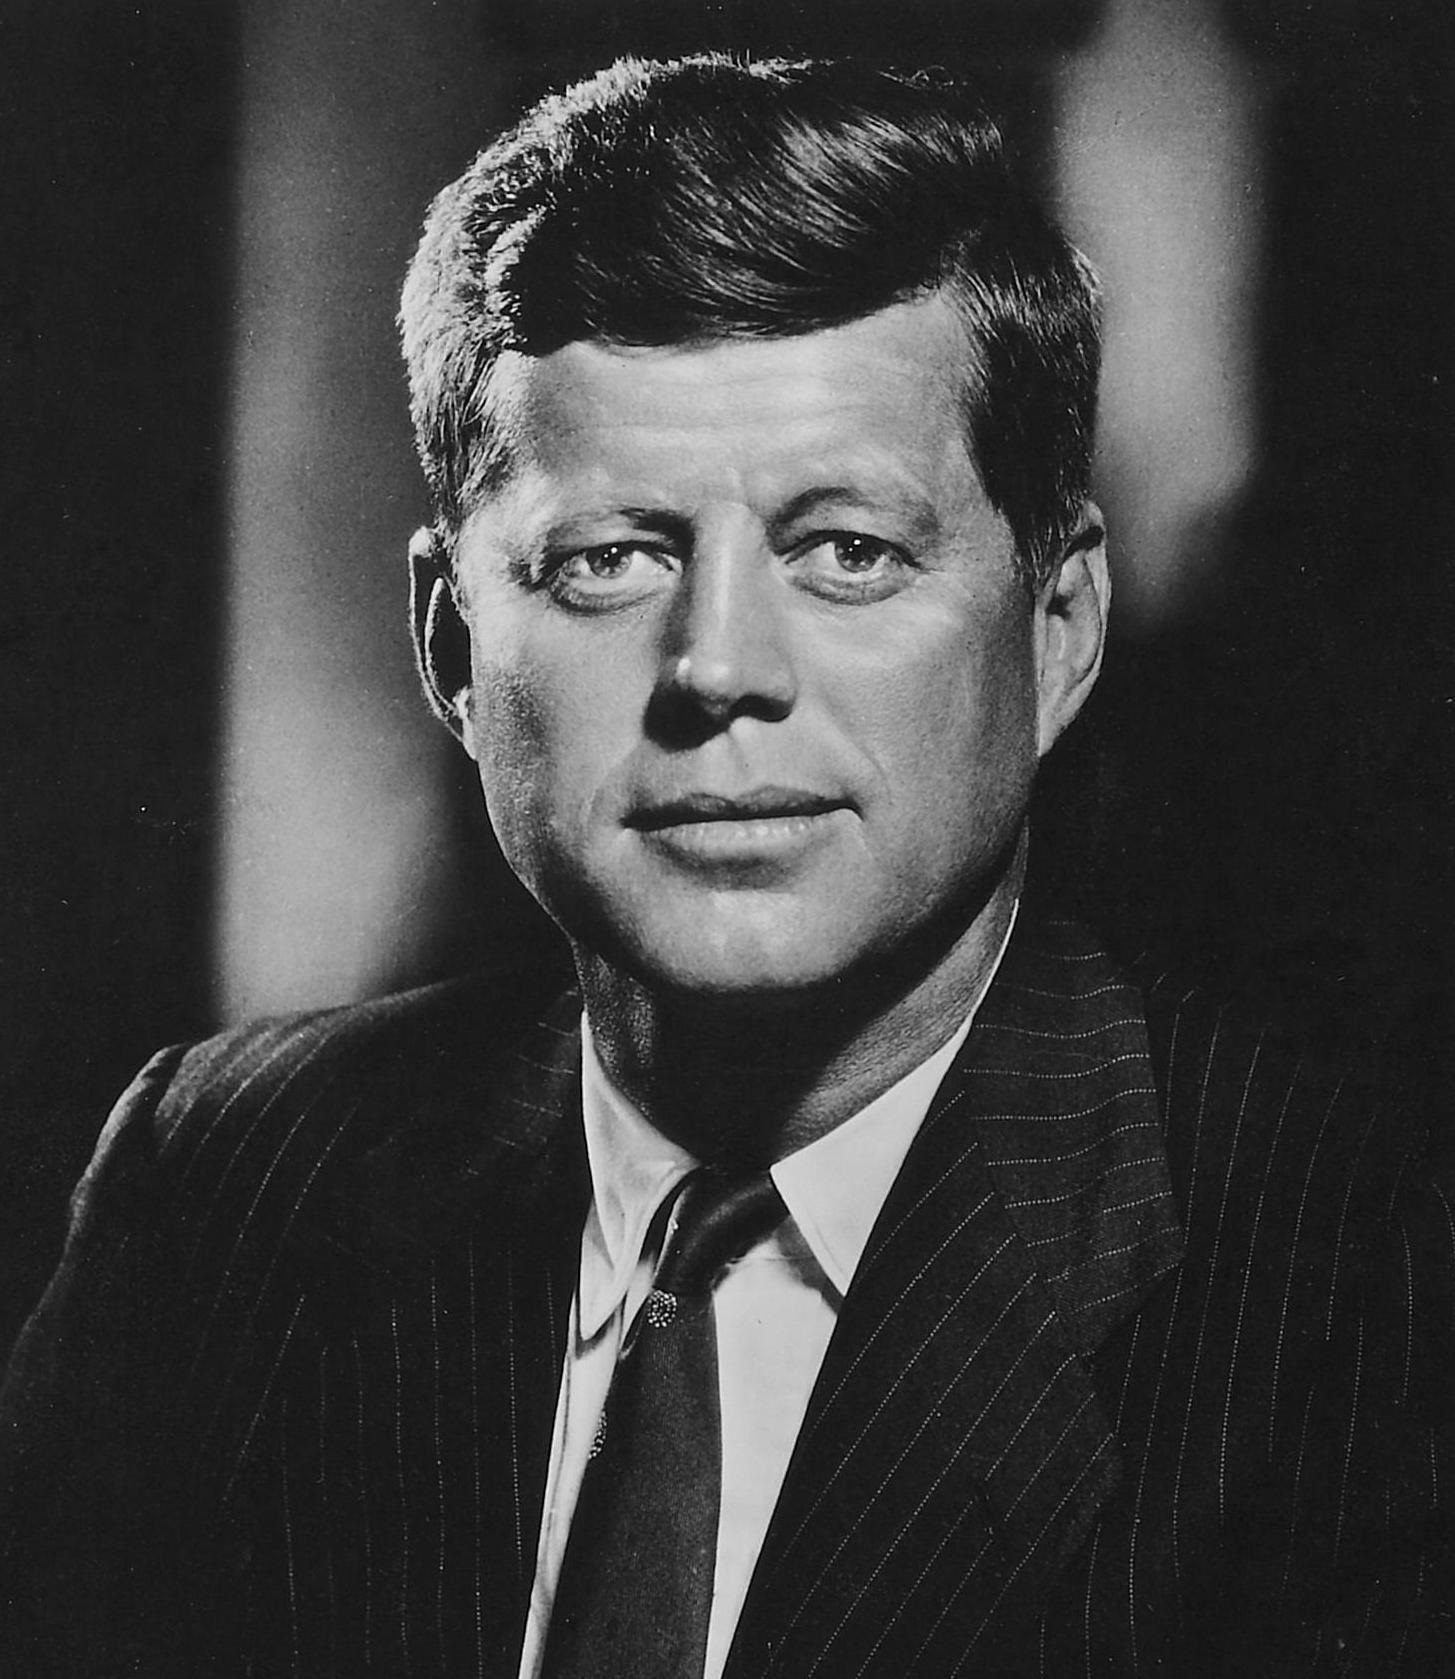 JFK's picture